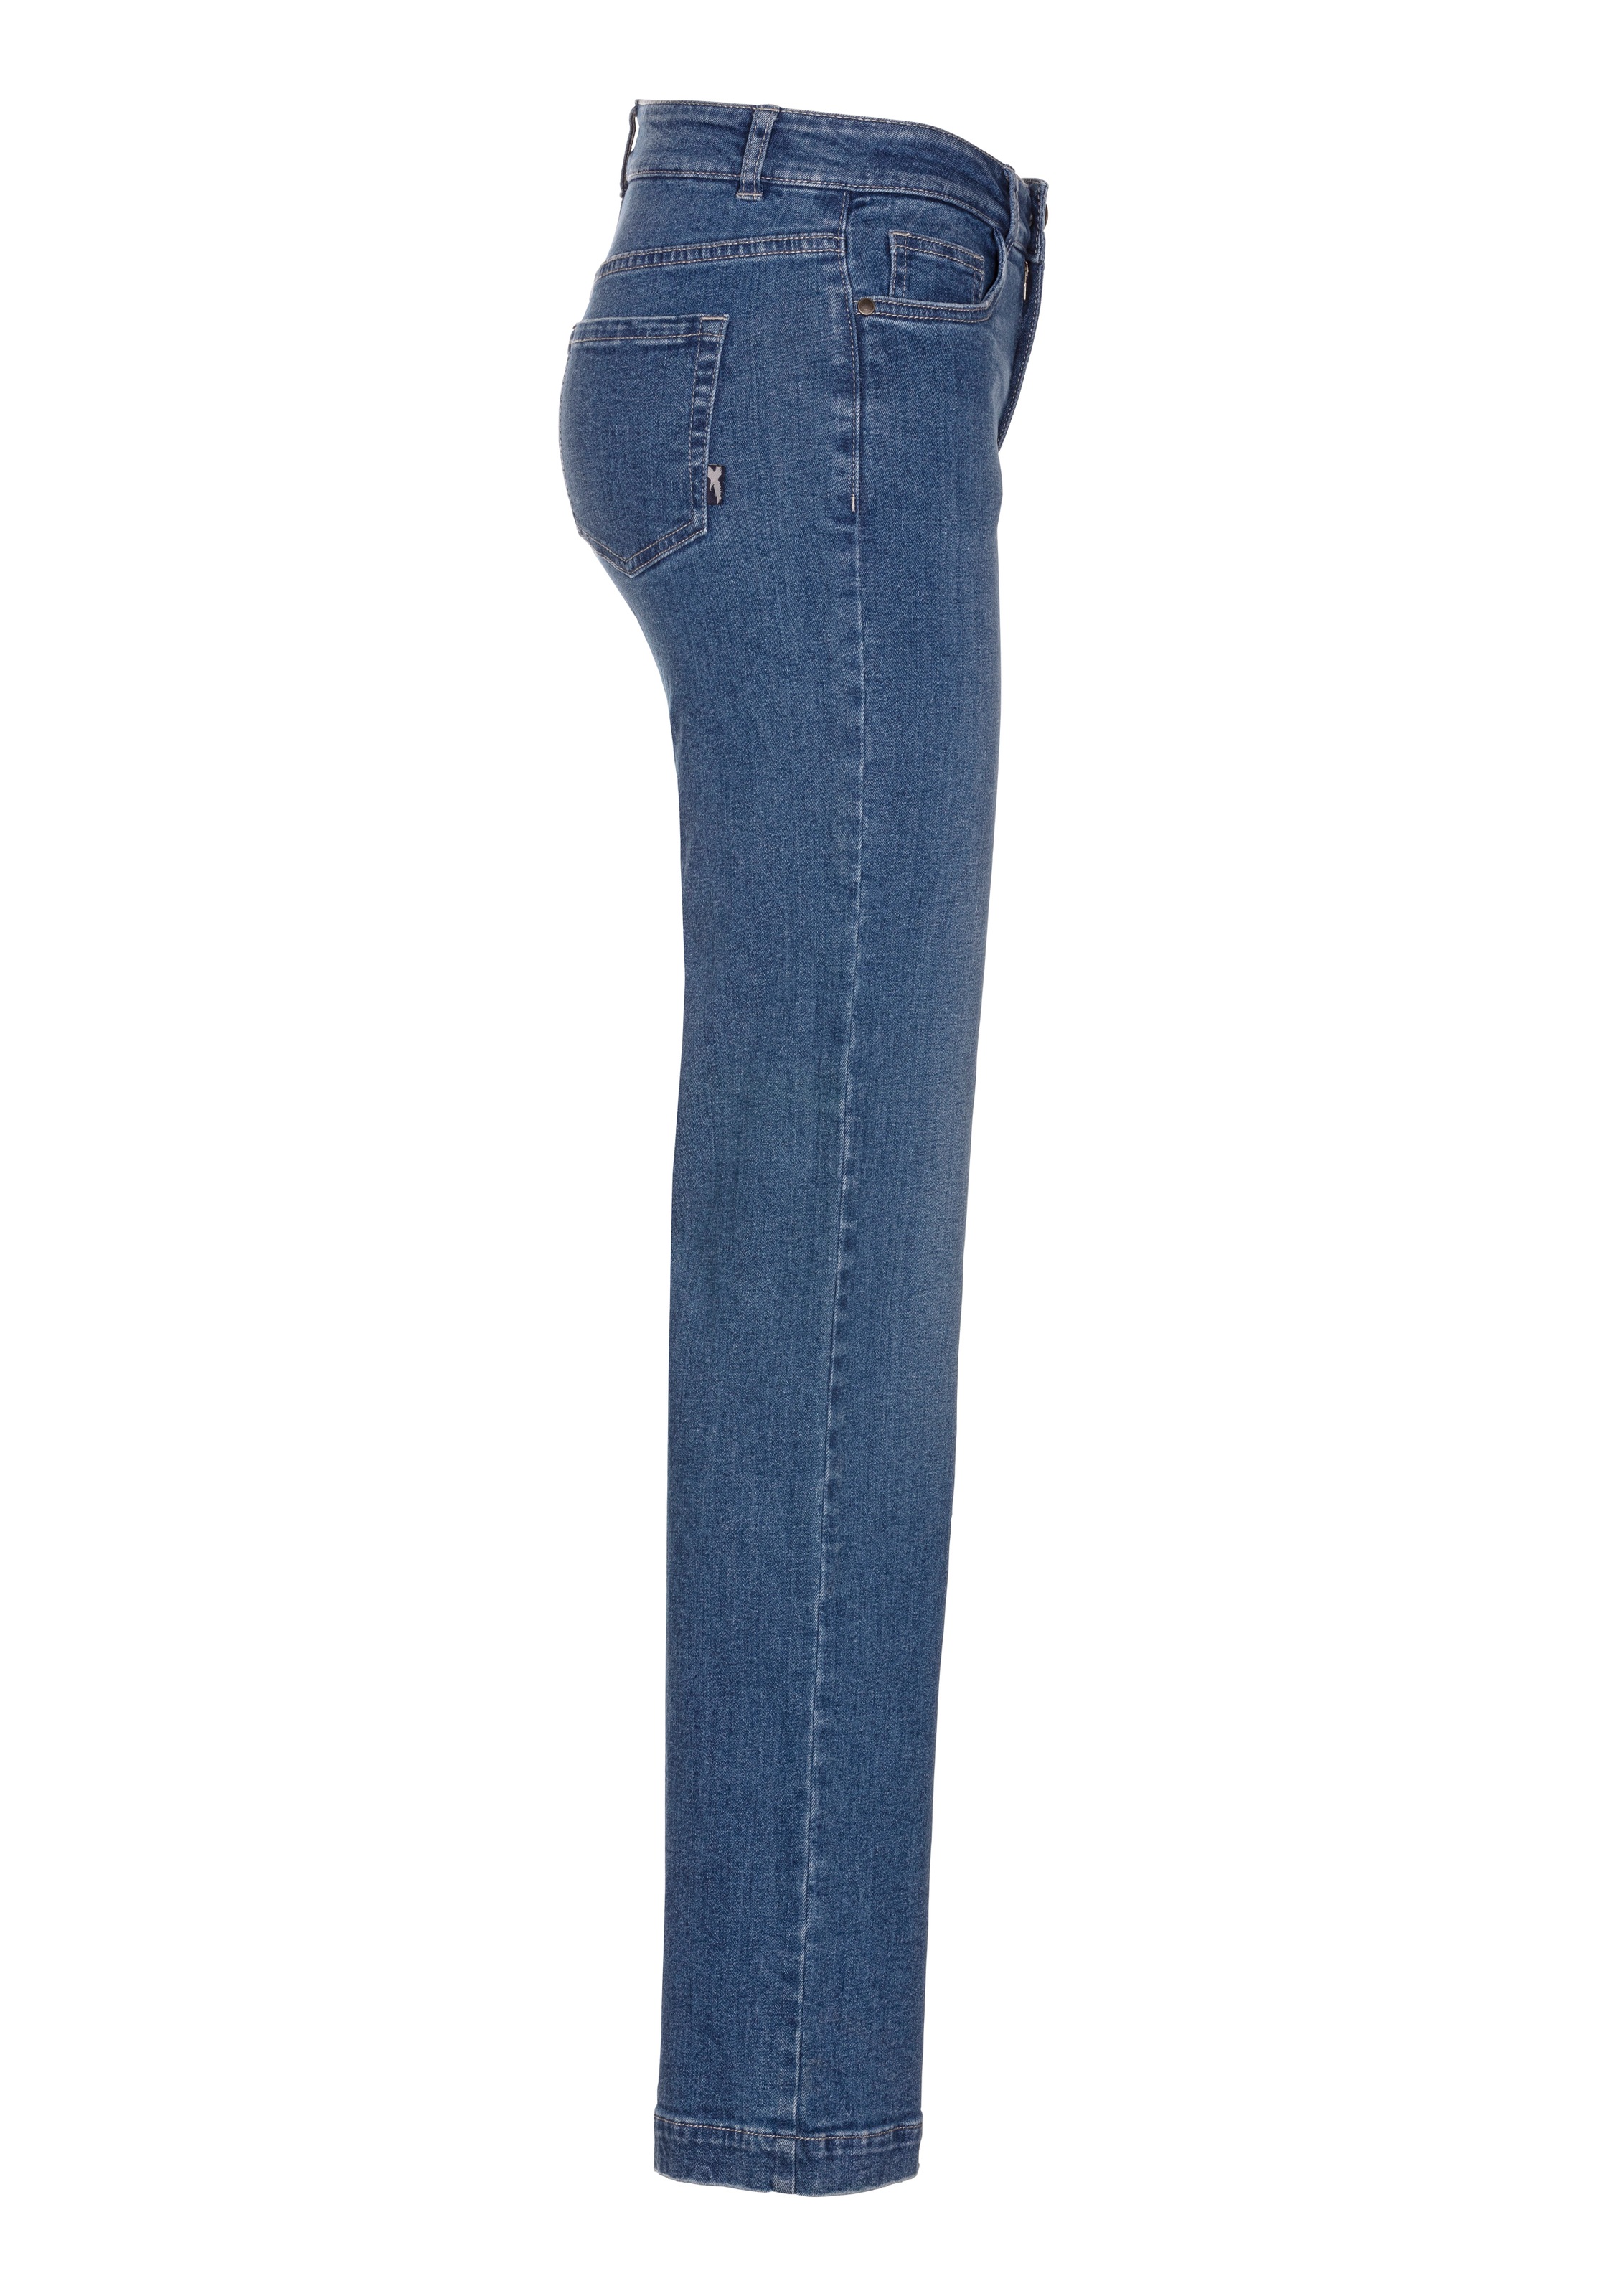 Arizona Gerade Jeans, "Wide Leg"